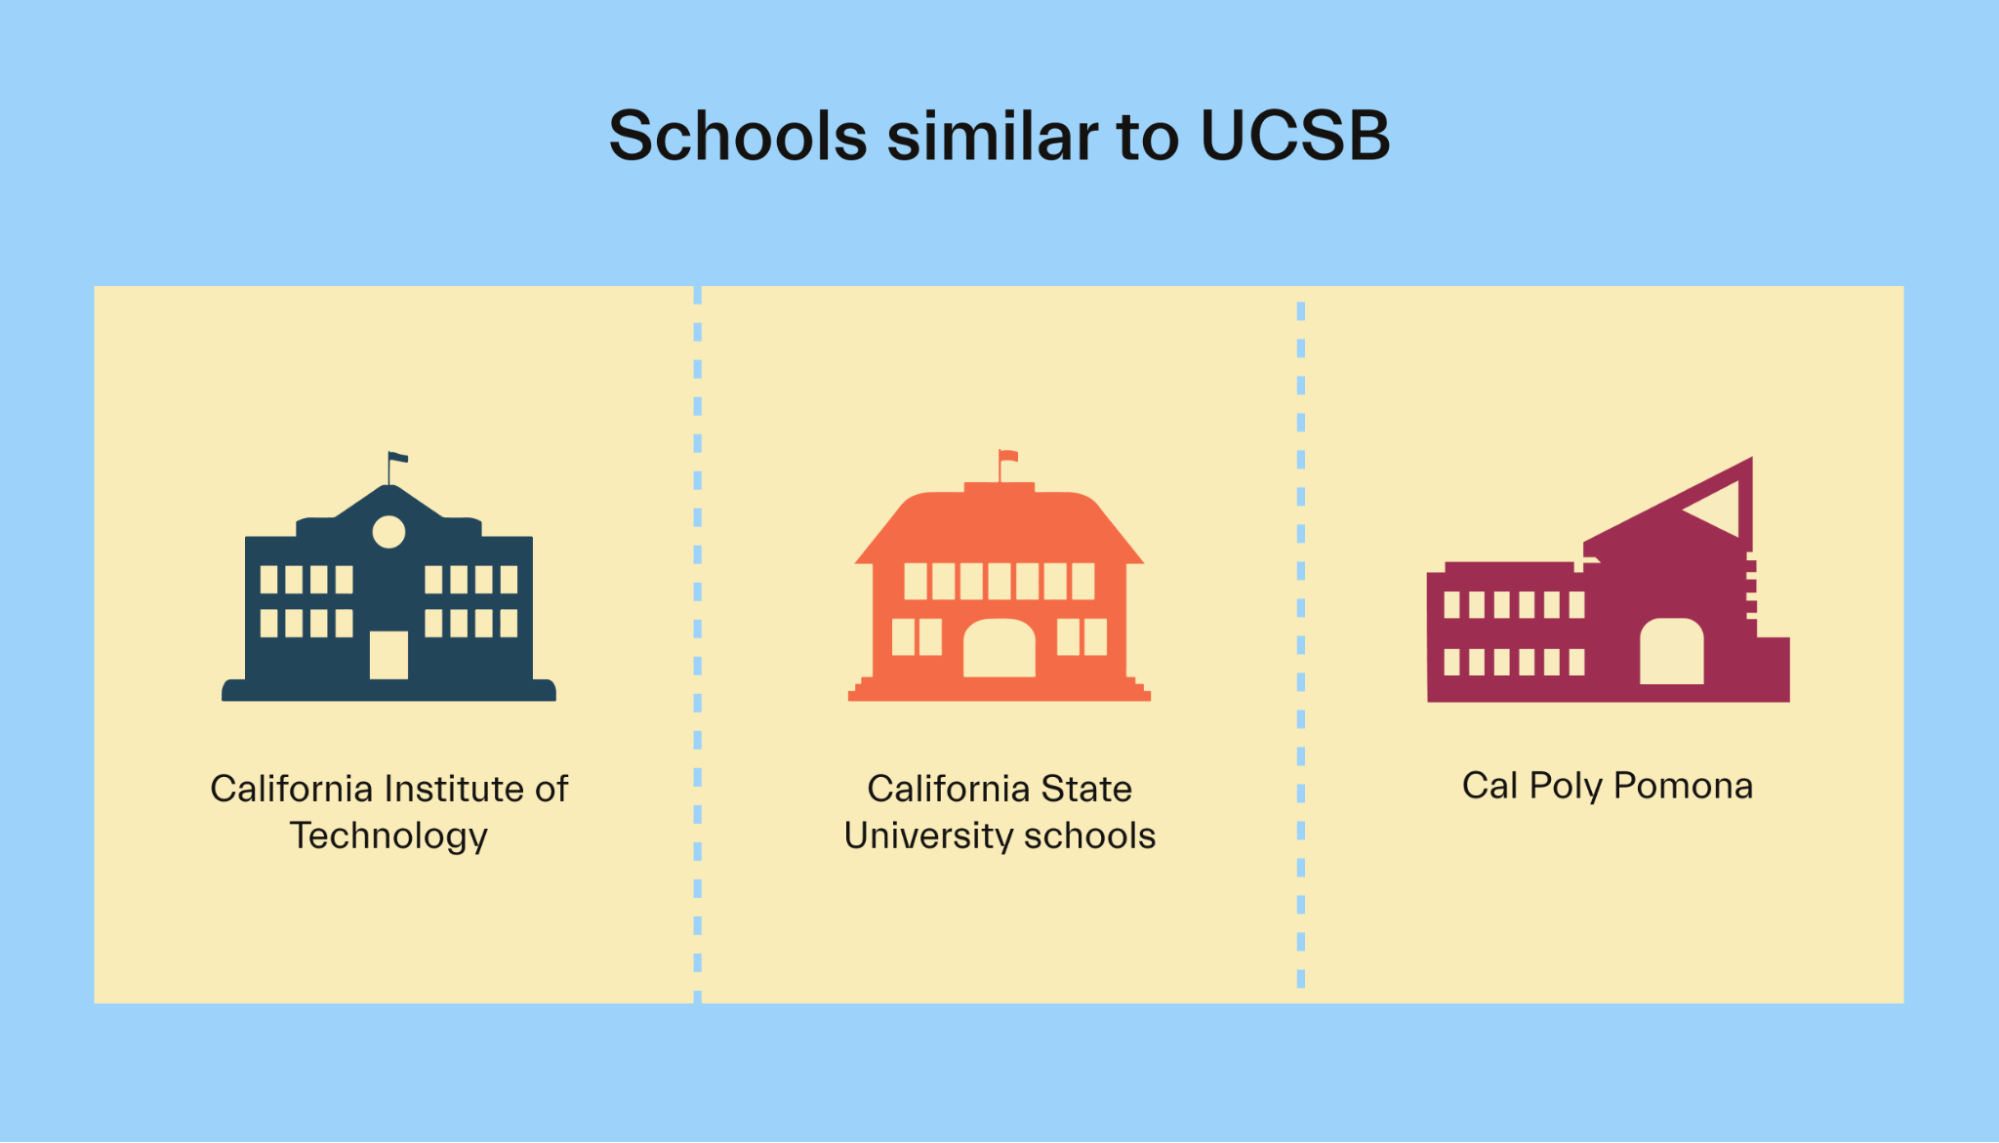 Schools similar to UCSB